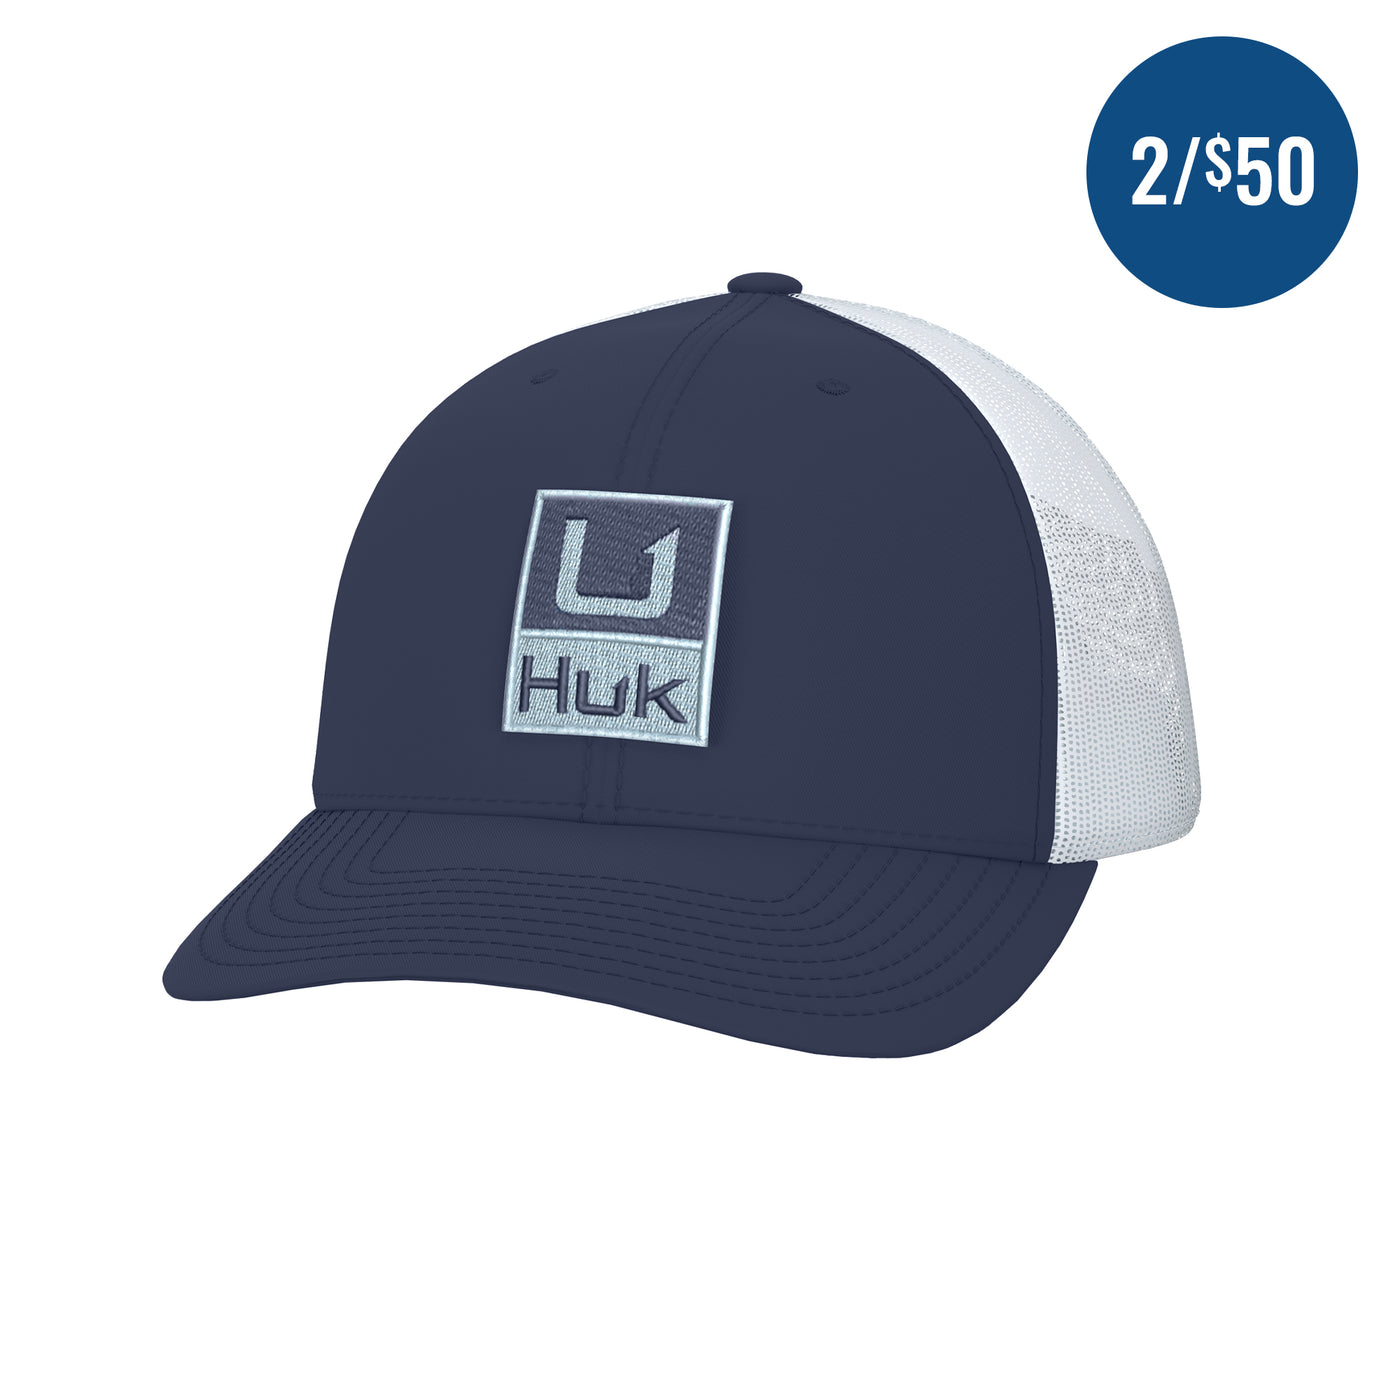 Huk'D Up Trucker Hat